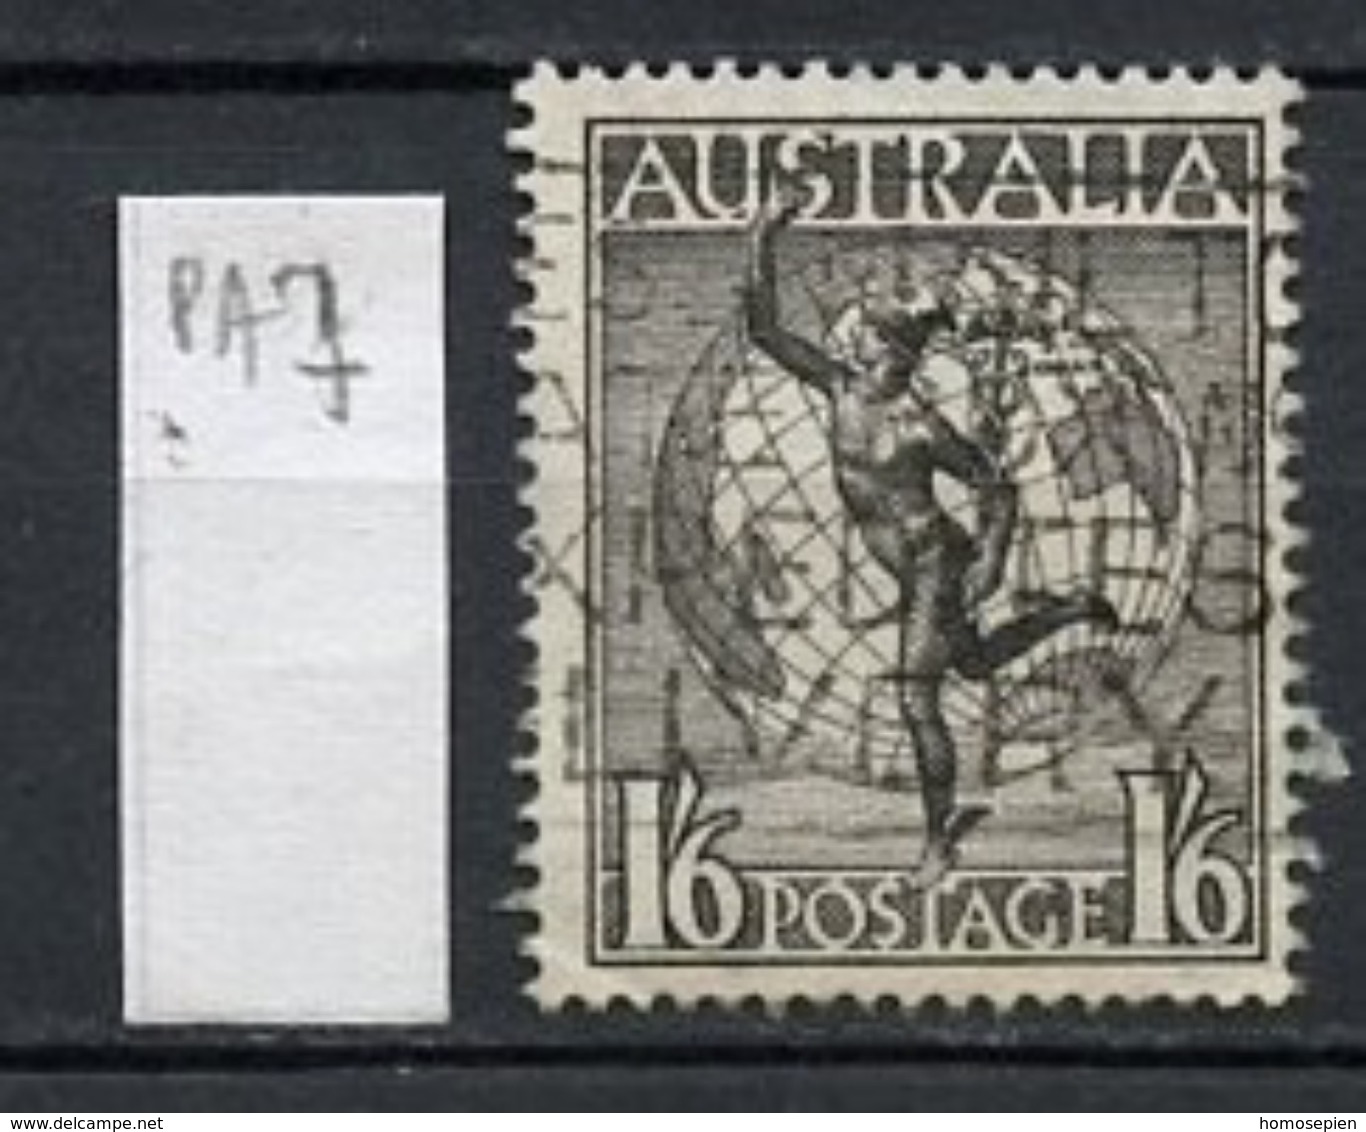 Australie - Australia Poste Aérienne 1949 Y&T N°PA7 - Michel N°185 (o) - 1/6 Allégorie - Gebraucht